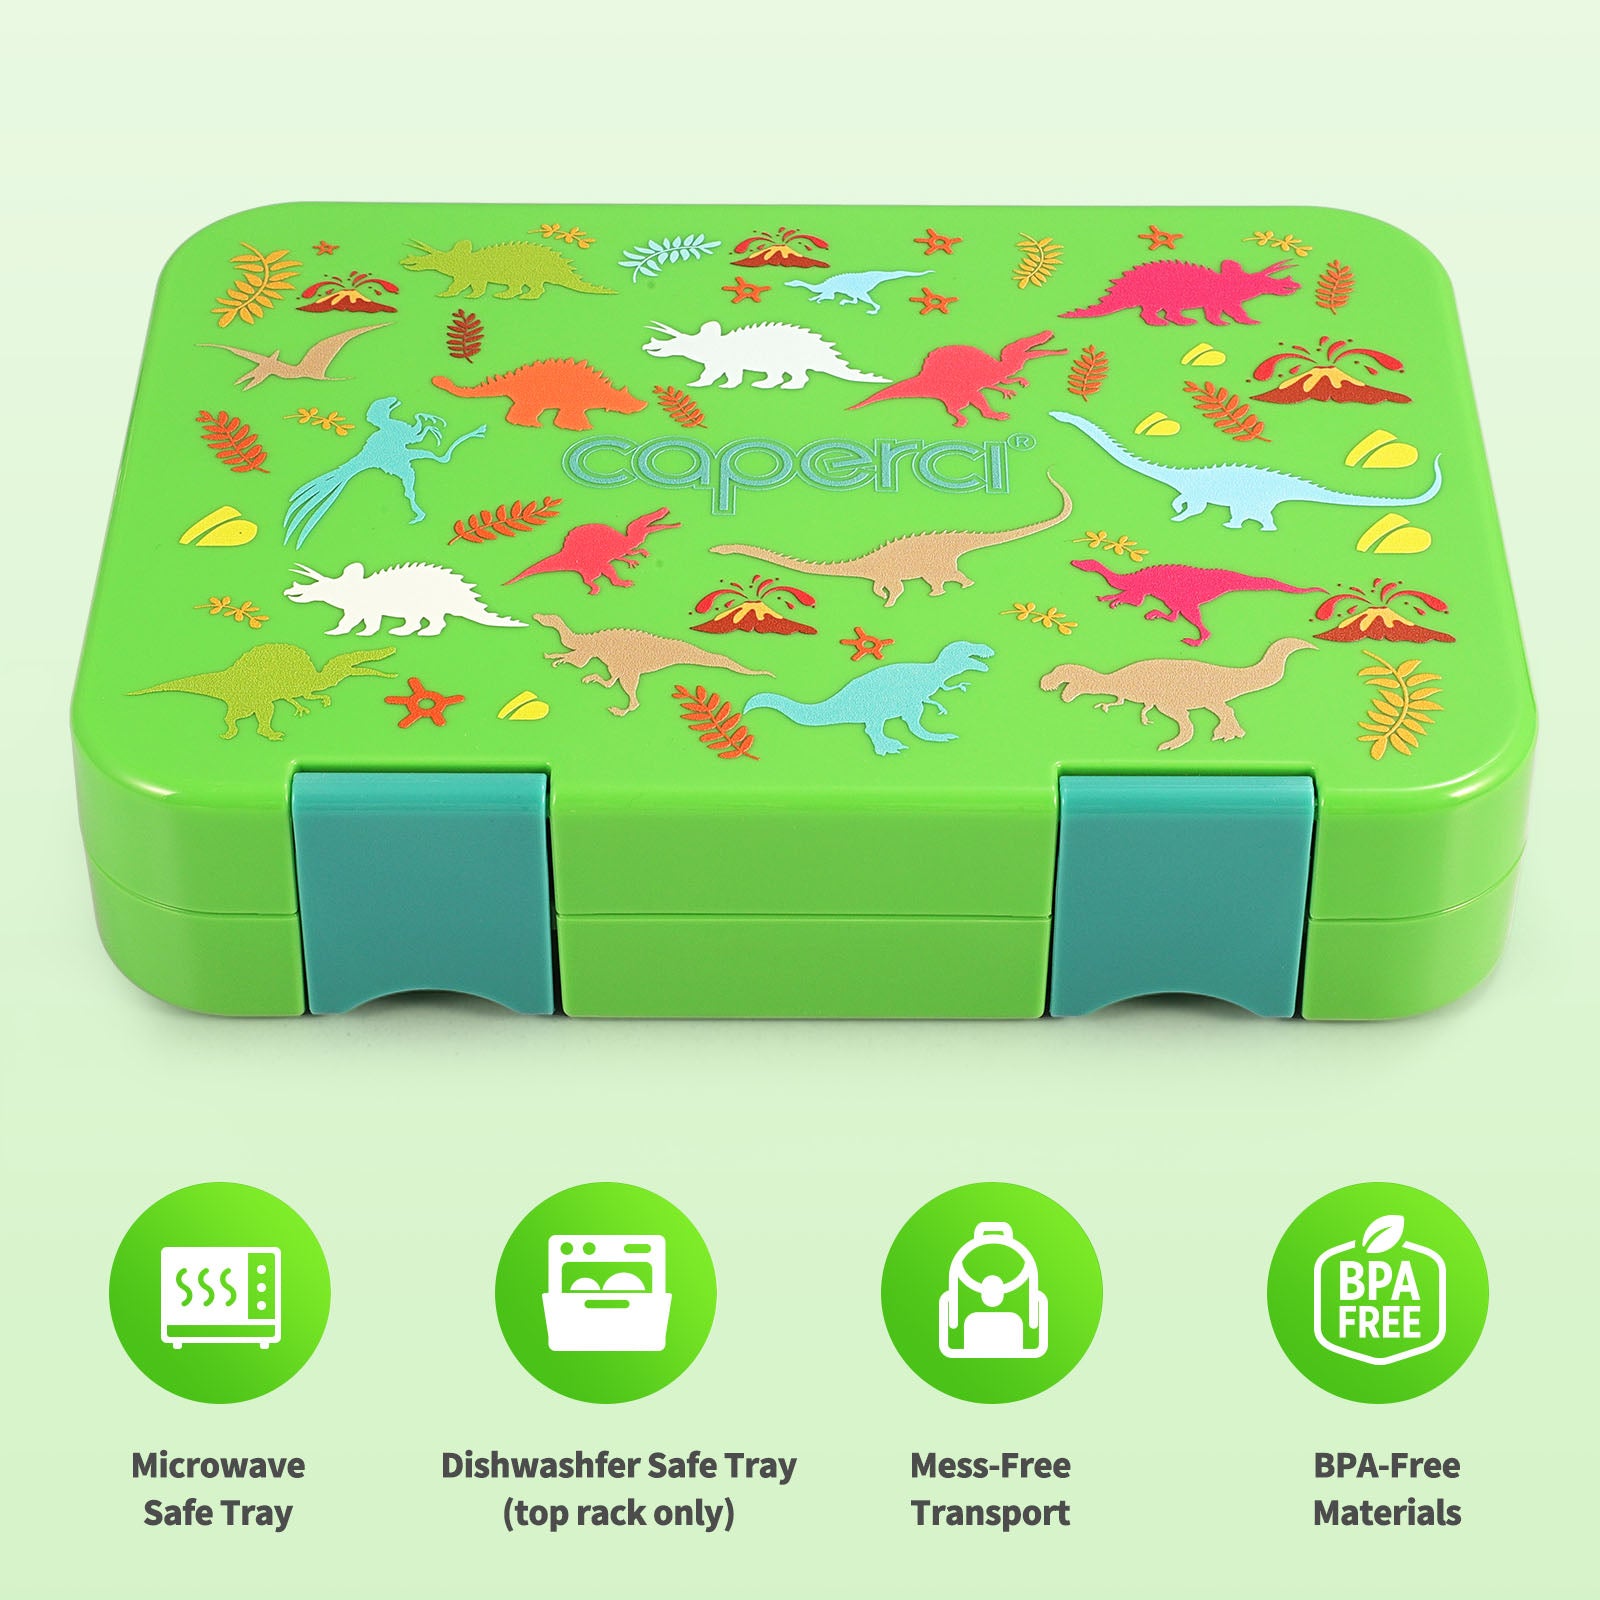 Caperci Dinosaur Bento Lunch Box for Kids